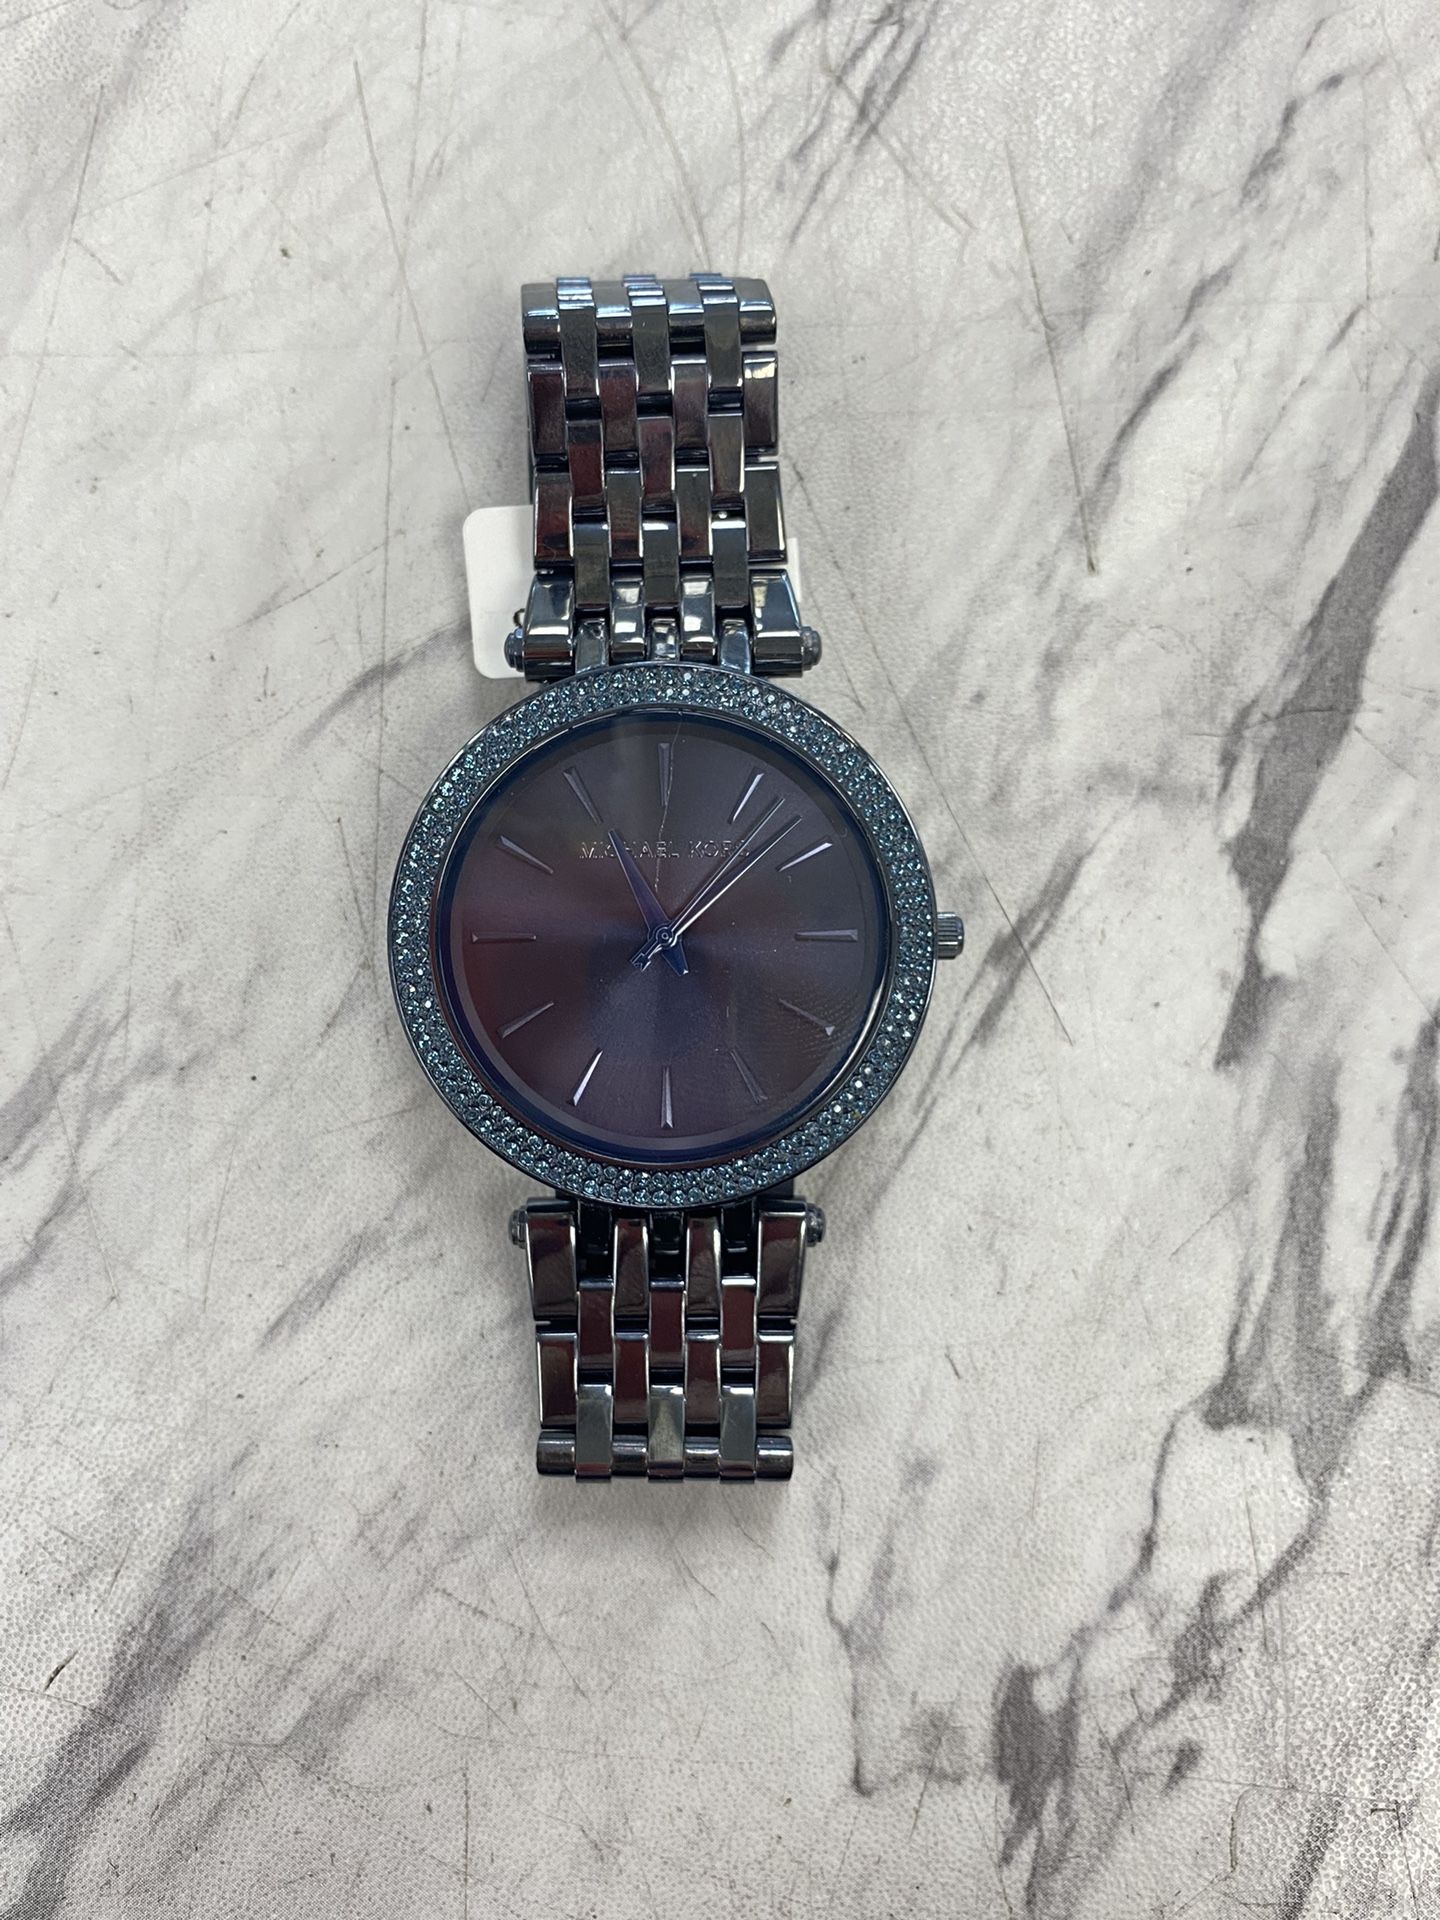 Michael Kors MK-3417 “Darci” Wrist Watch